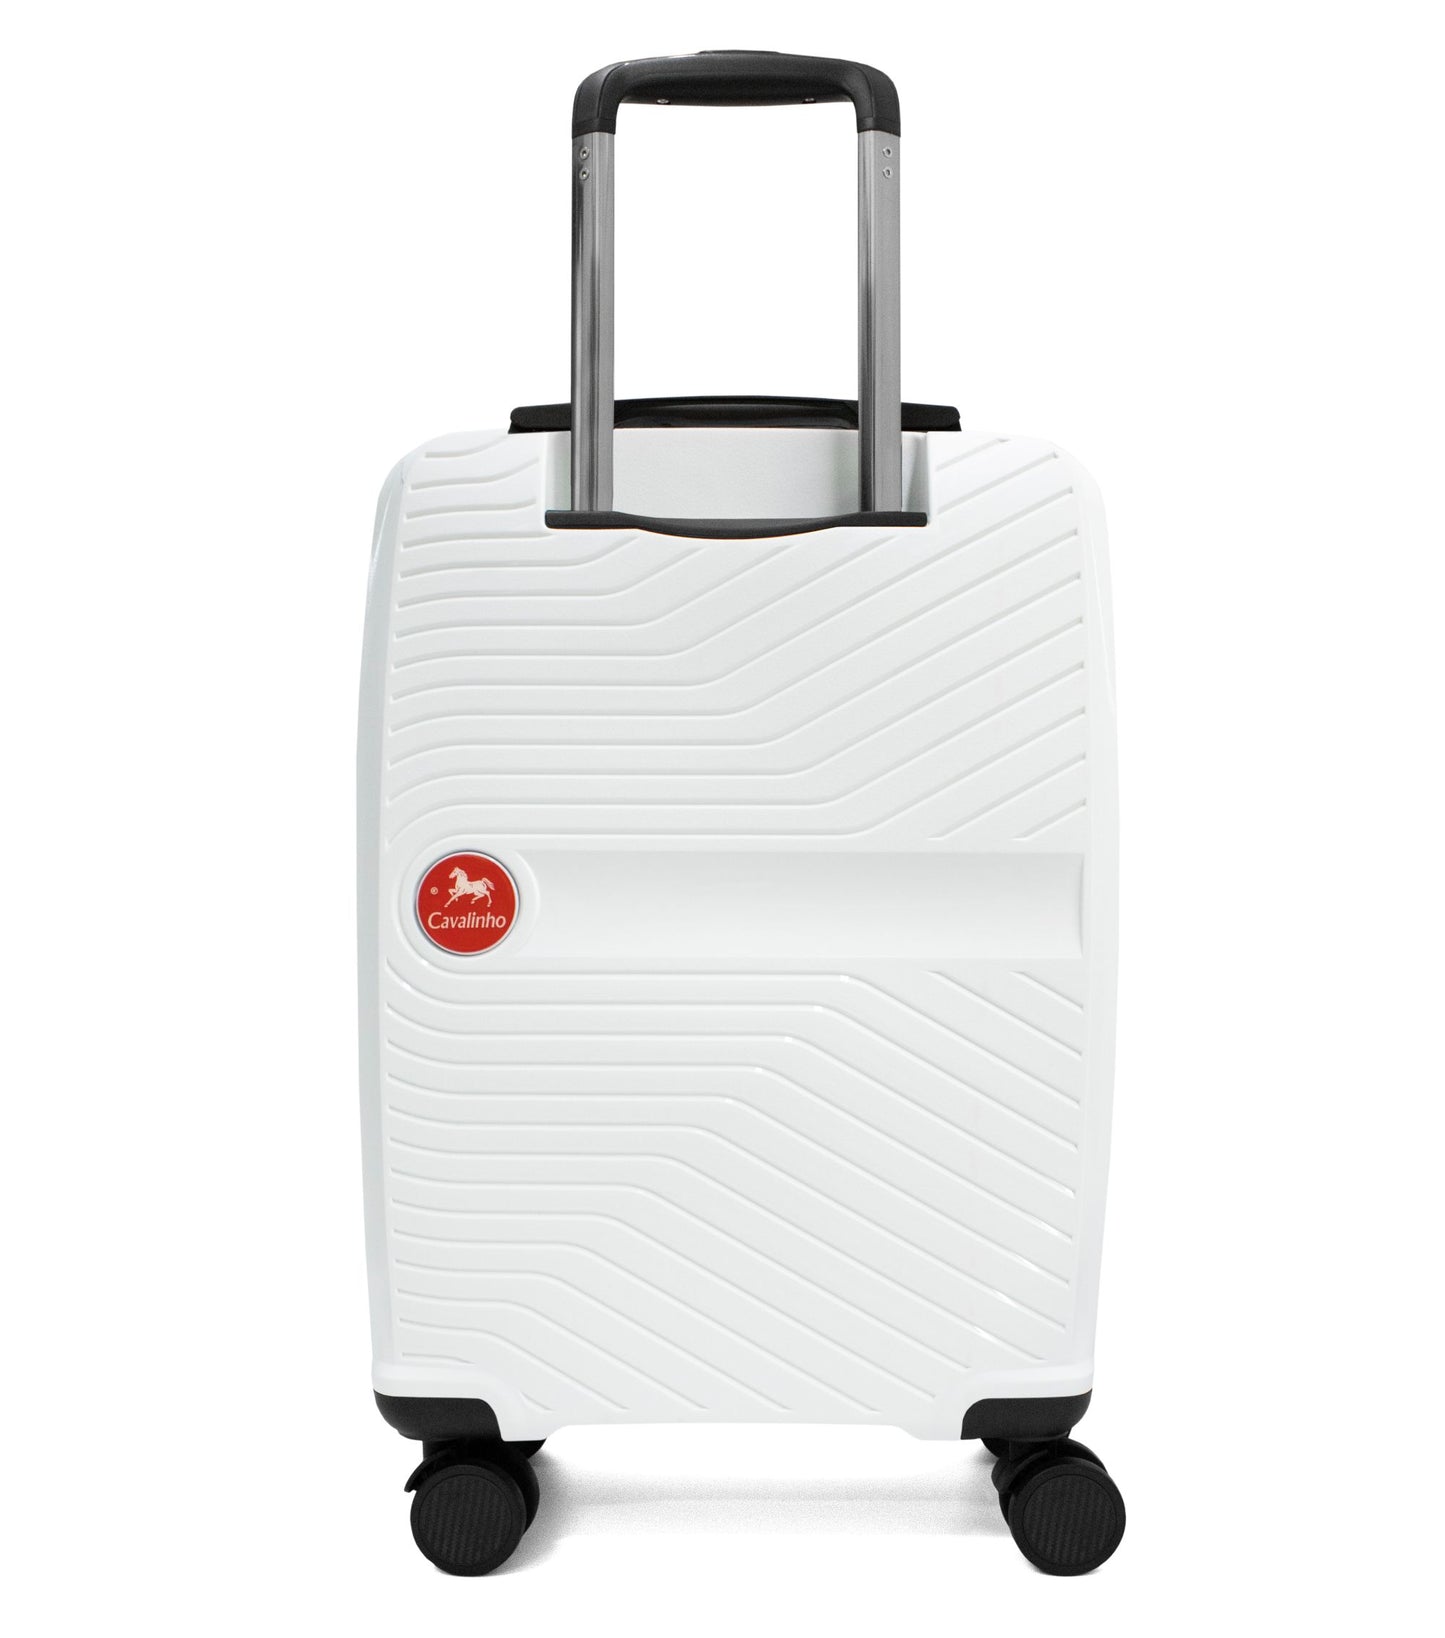 Cavalinho Colorful Carry-on Hardside Luggage (19") - 19 inch White - 68020004.06.19_3